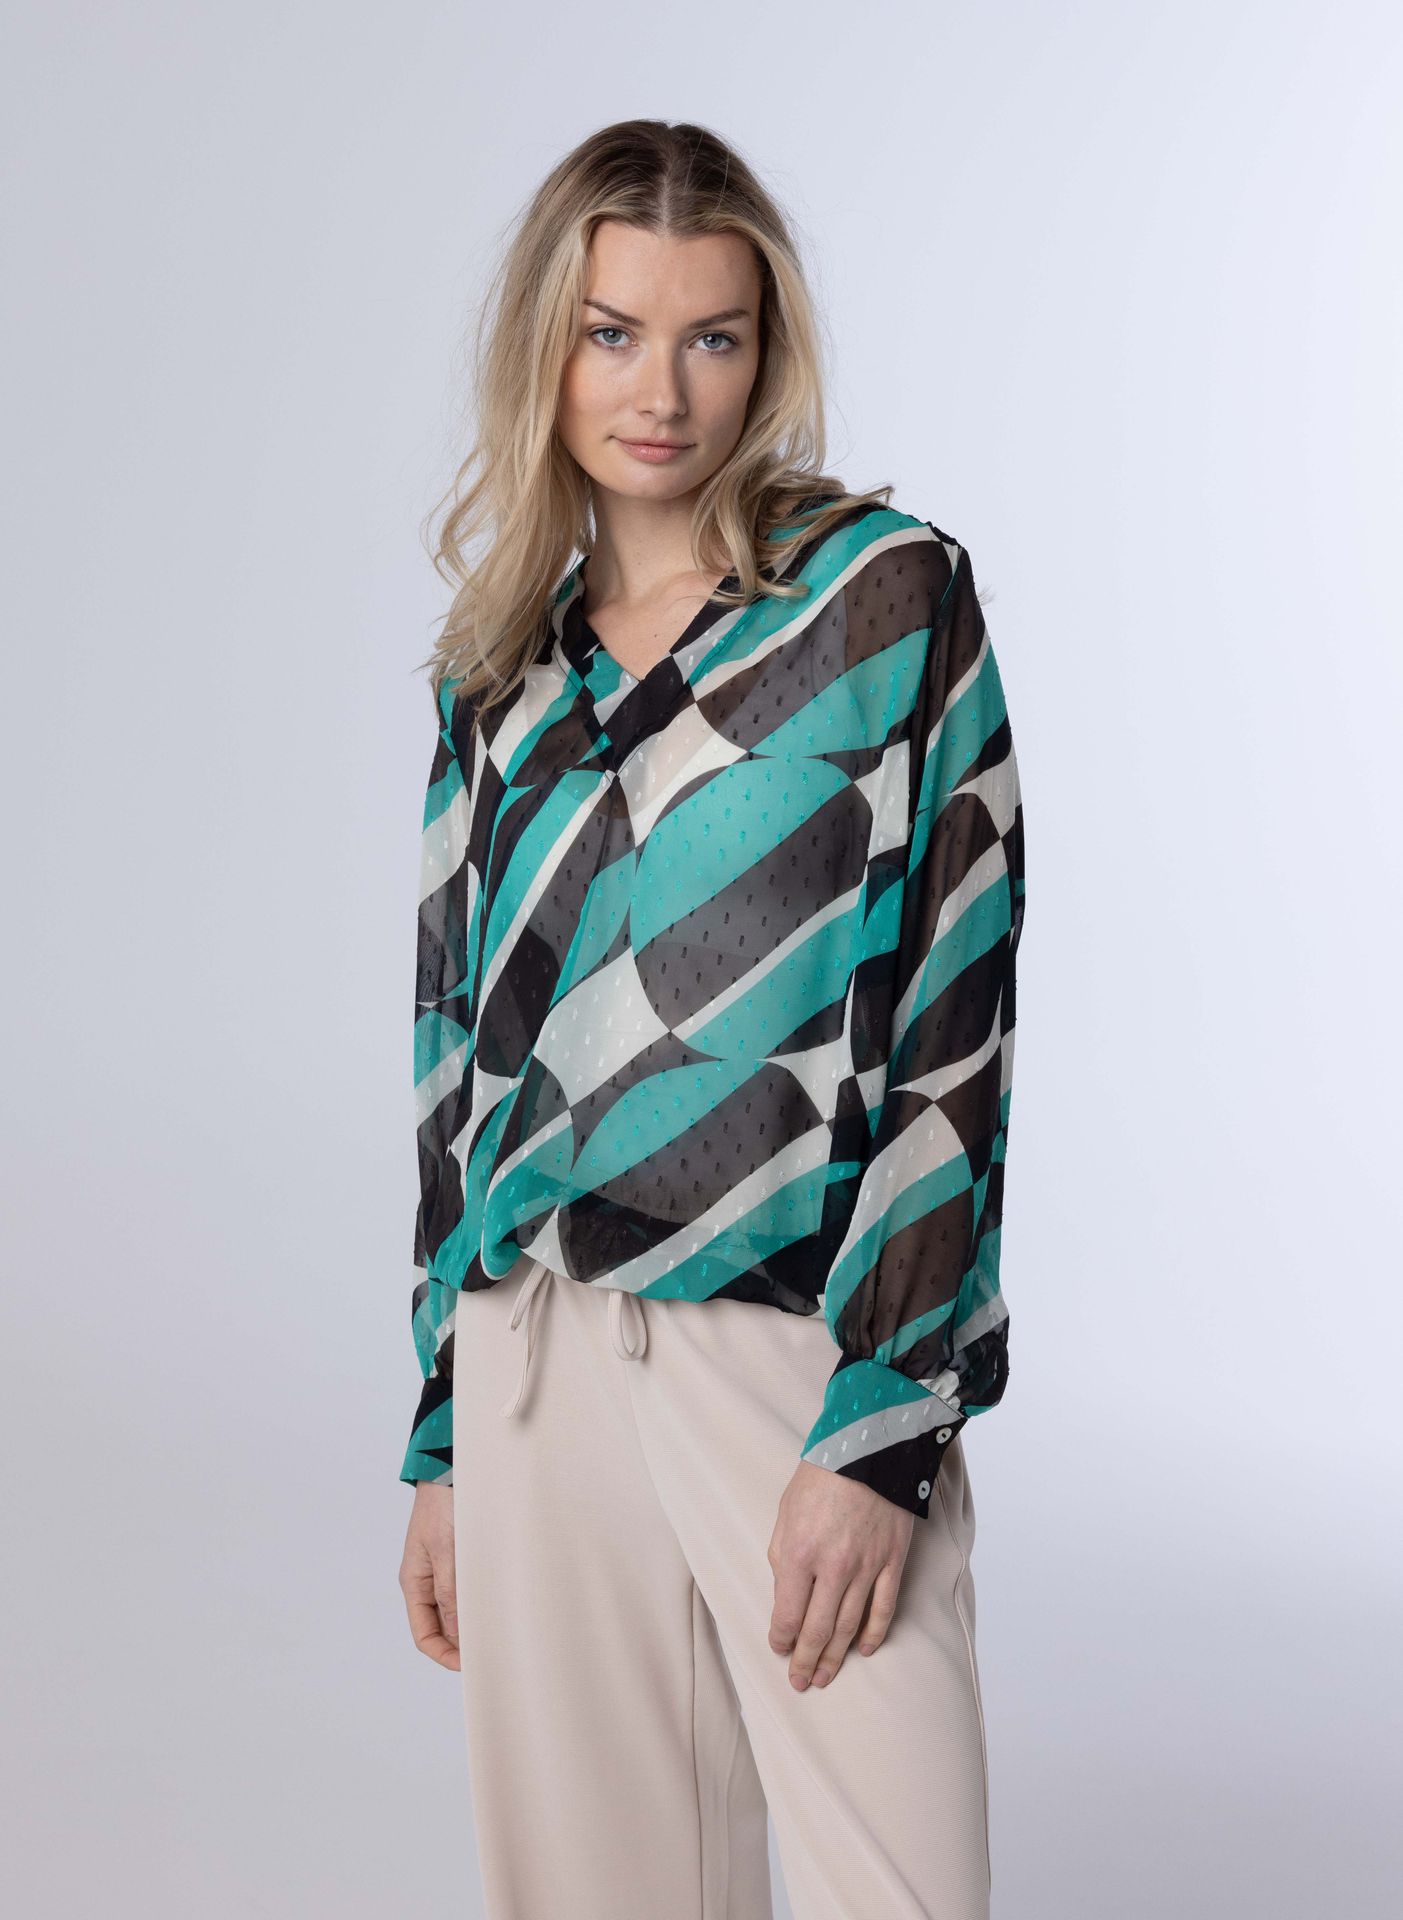 Norah Meerkleurige transparante blouse jade multicolor 213727-573